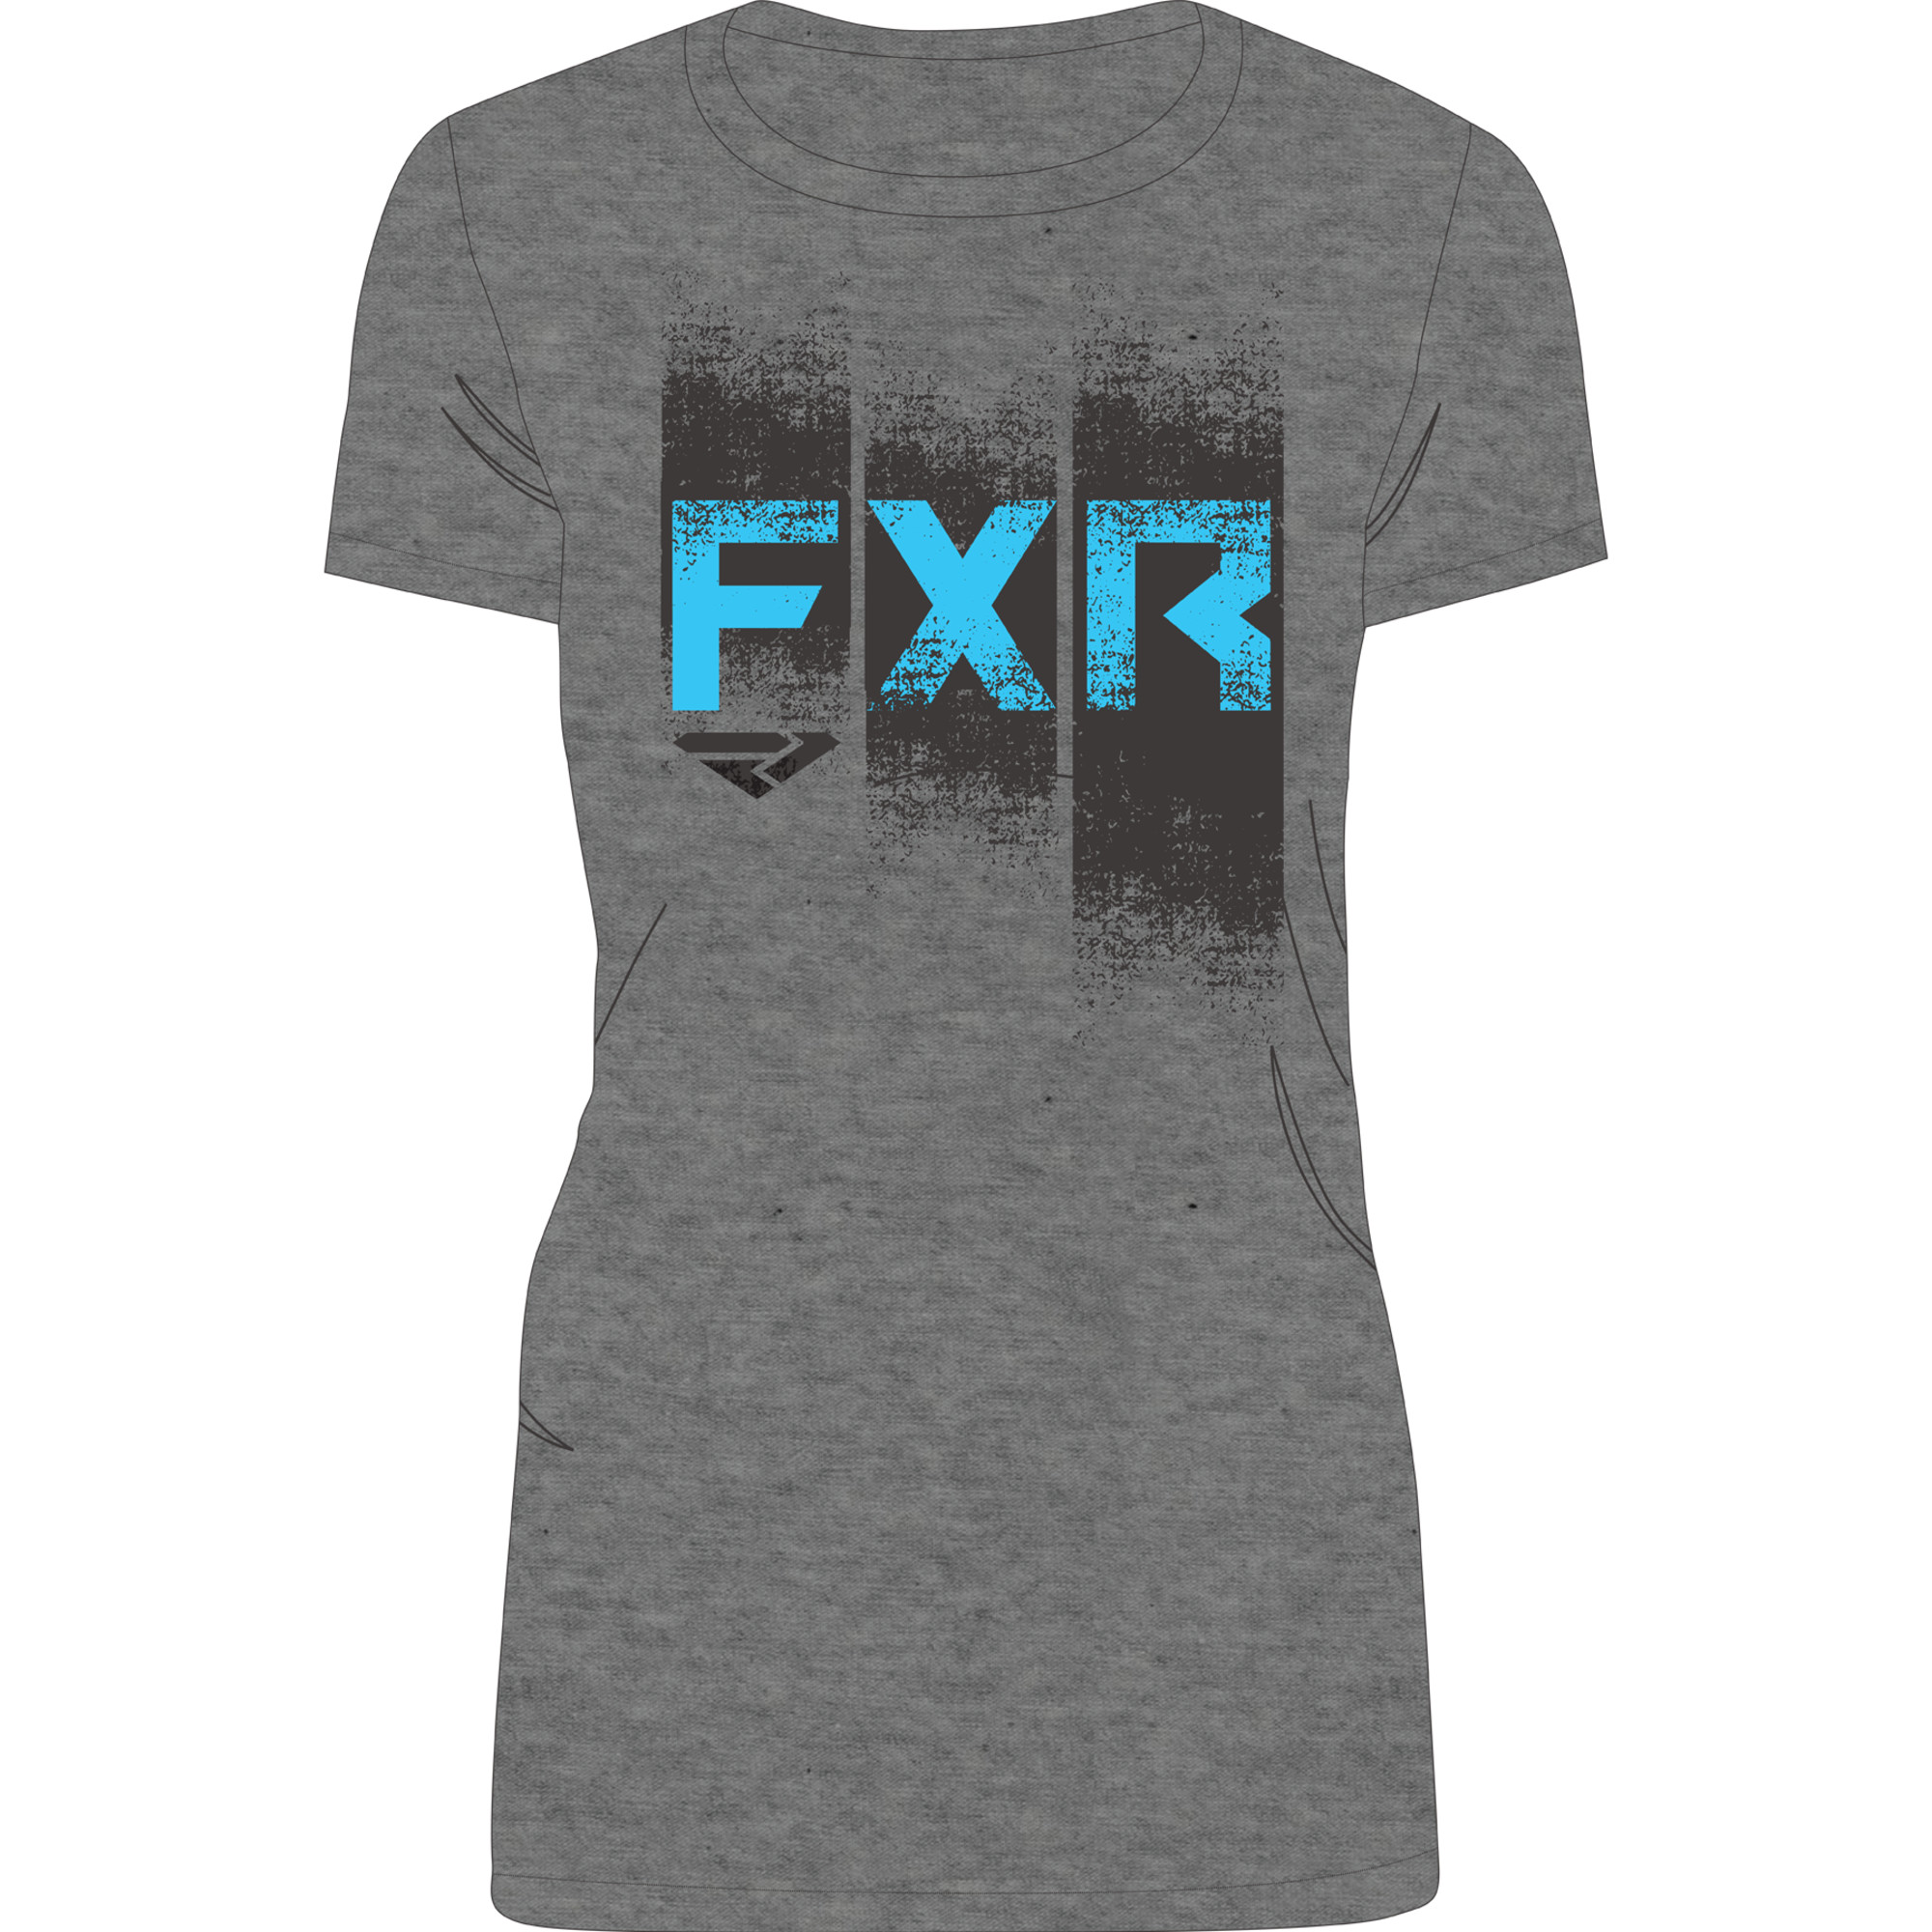 fxr racing t-shirt shirts for kids girls broadcast